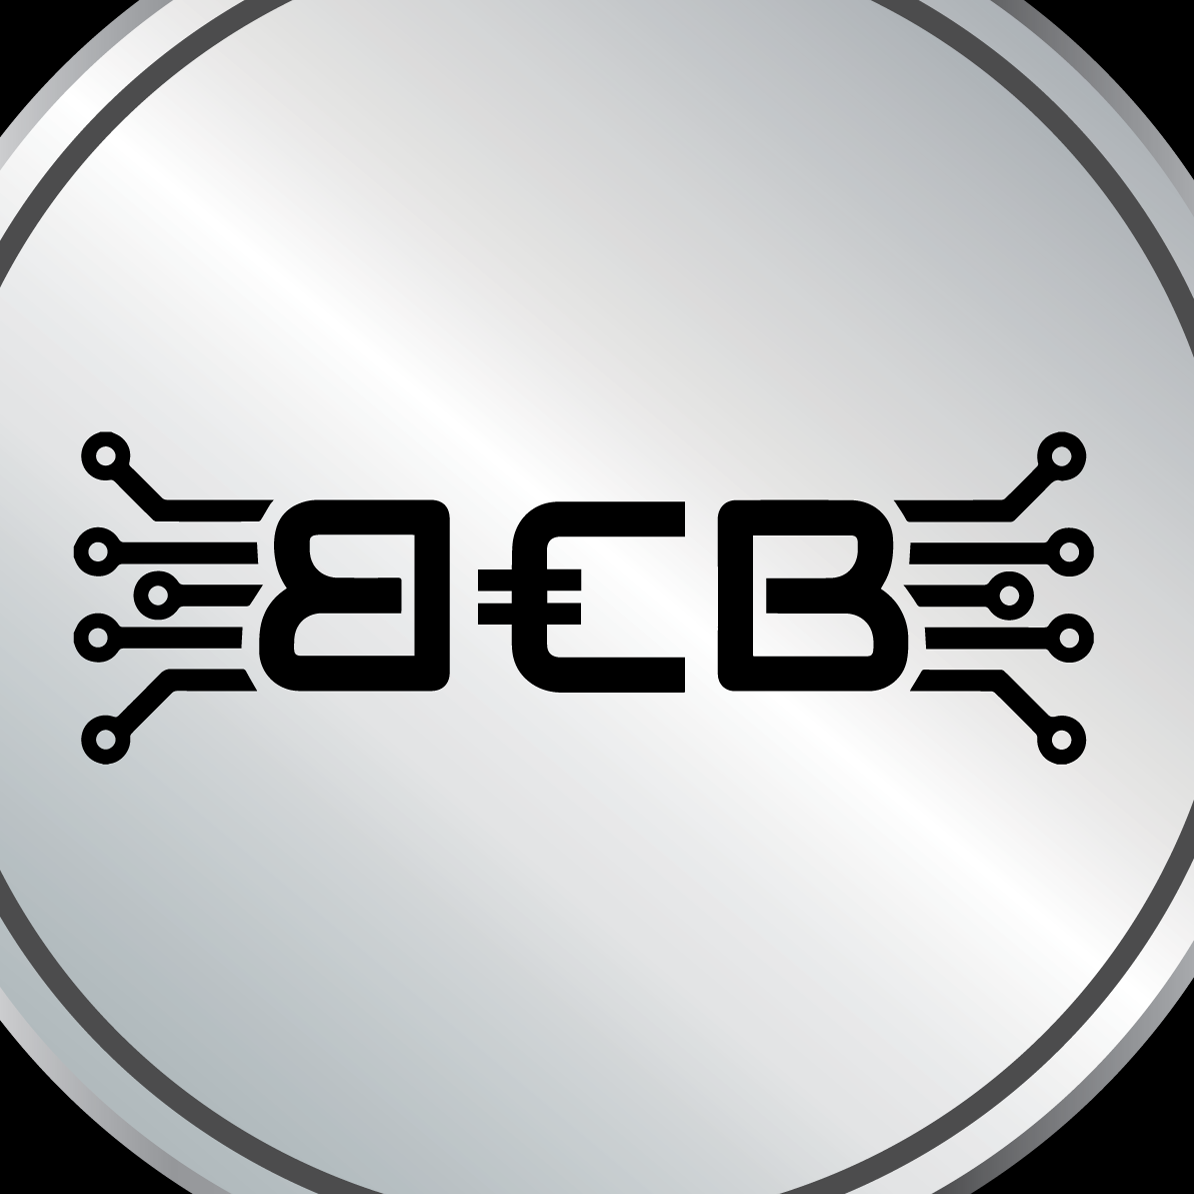 bcb.blockchaincryptobusiness